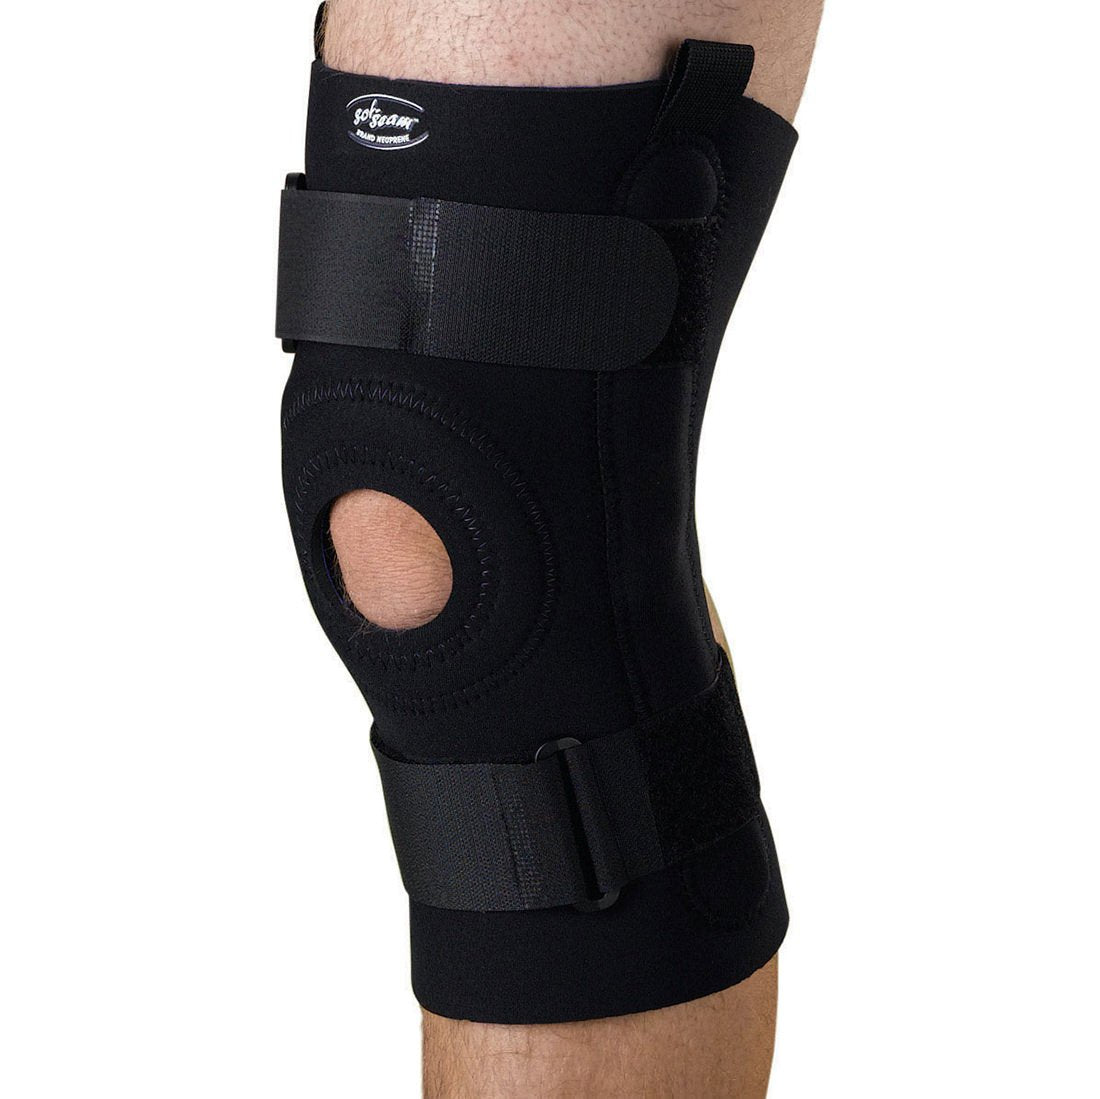 U-Shaped Hinged Knee Support - Just Walkers